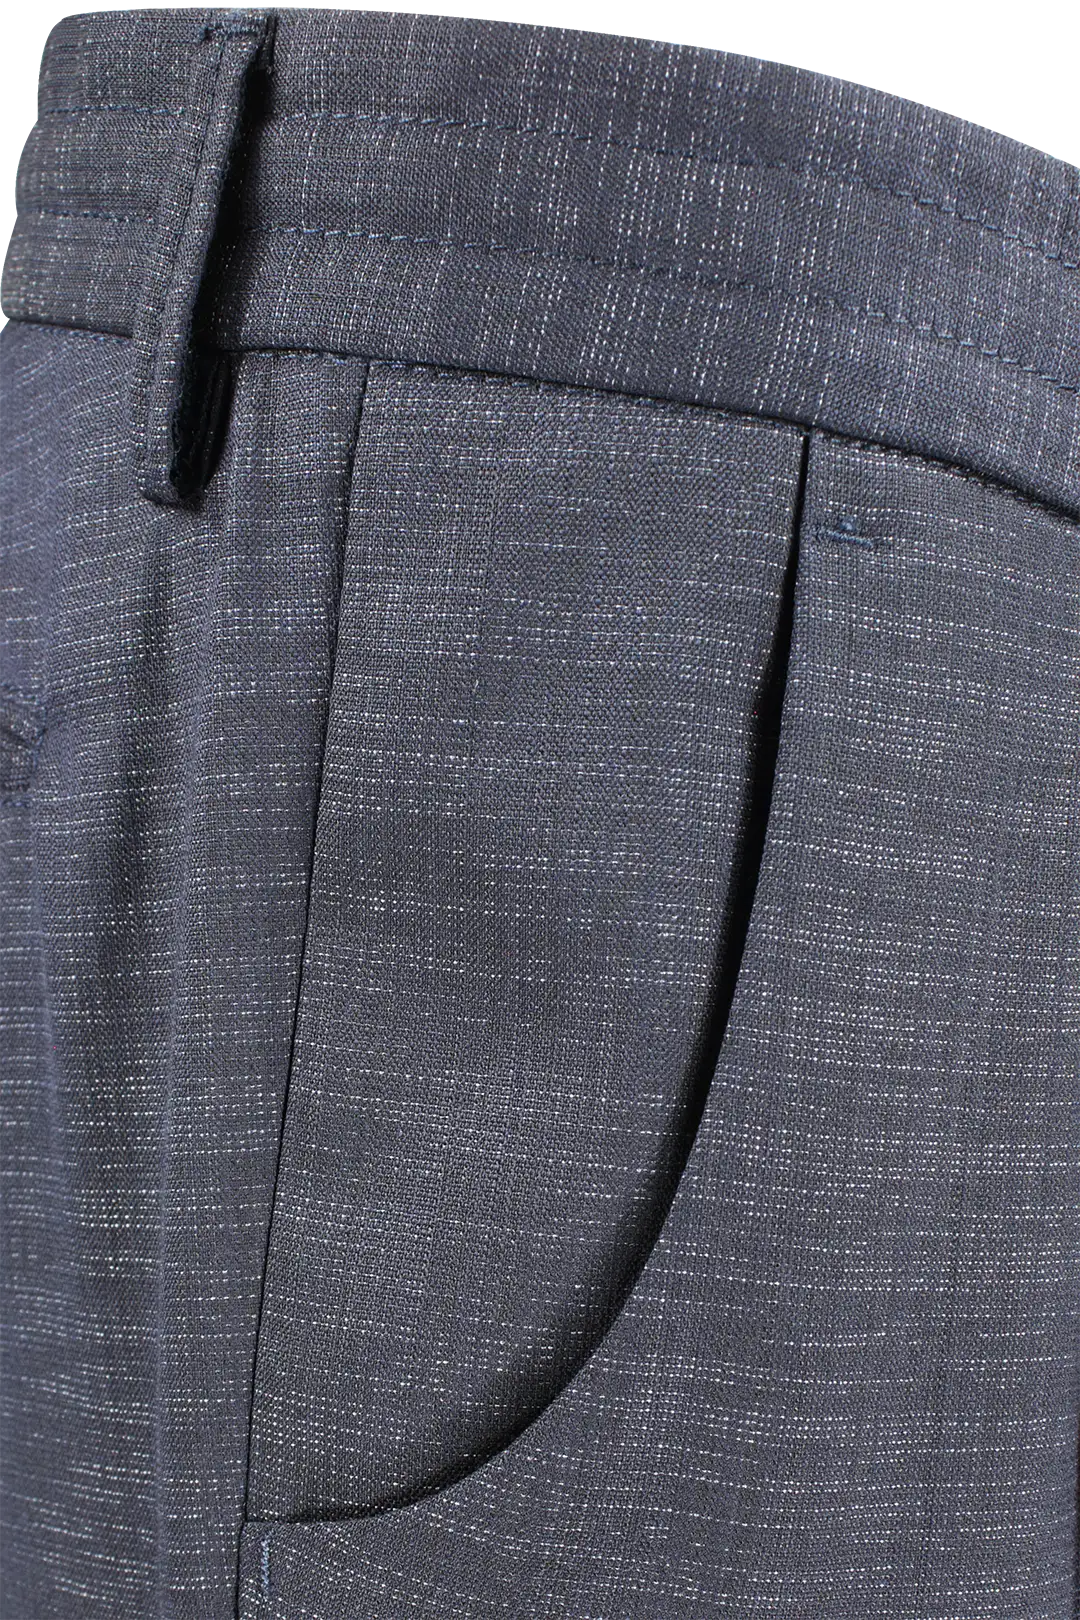 Pantalone con pince e coulisse in lana operata blu tasca